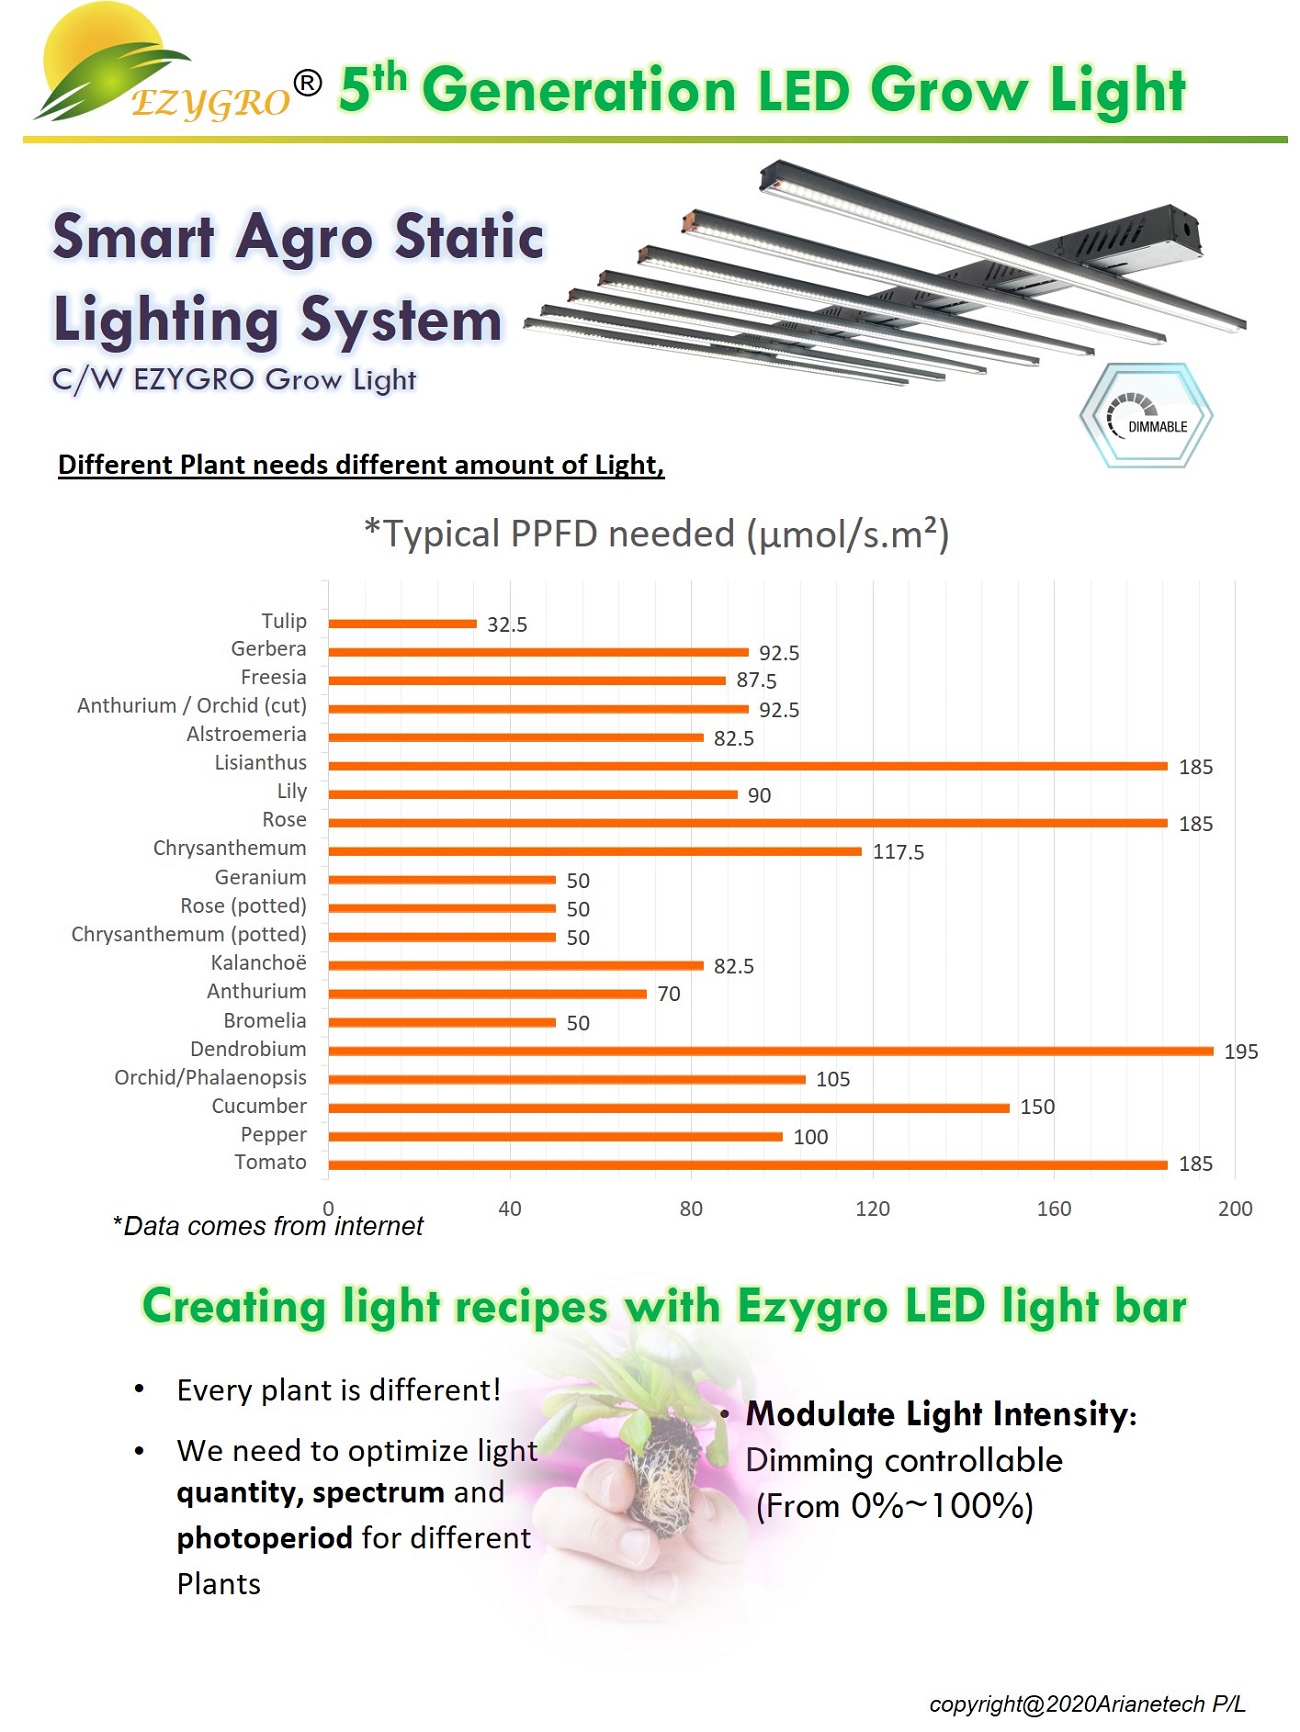 5 generation ezygro led grow light bar for crops in vertical farming 7